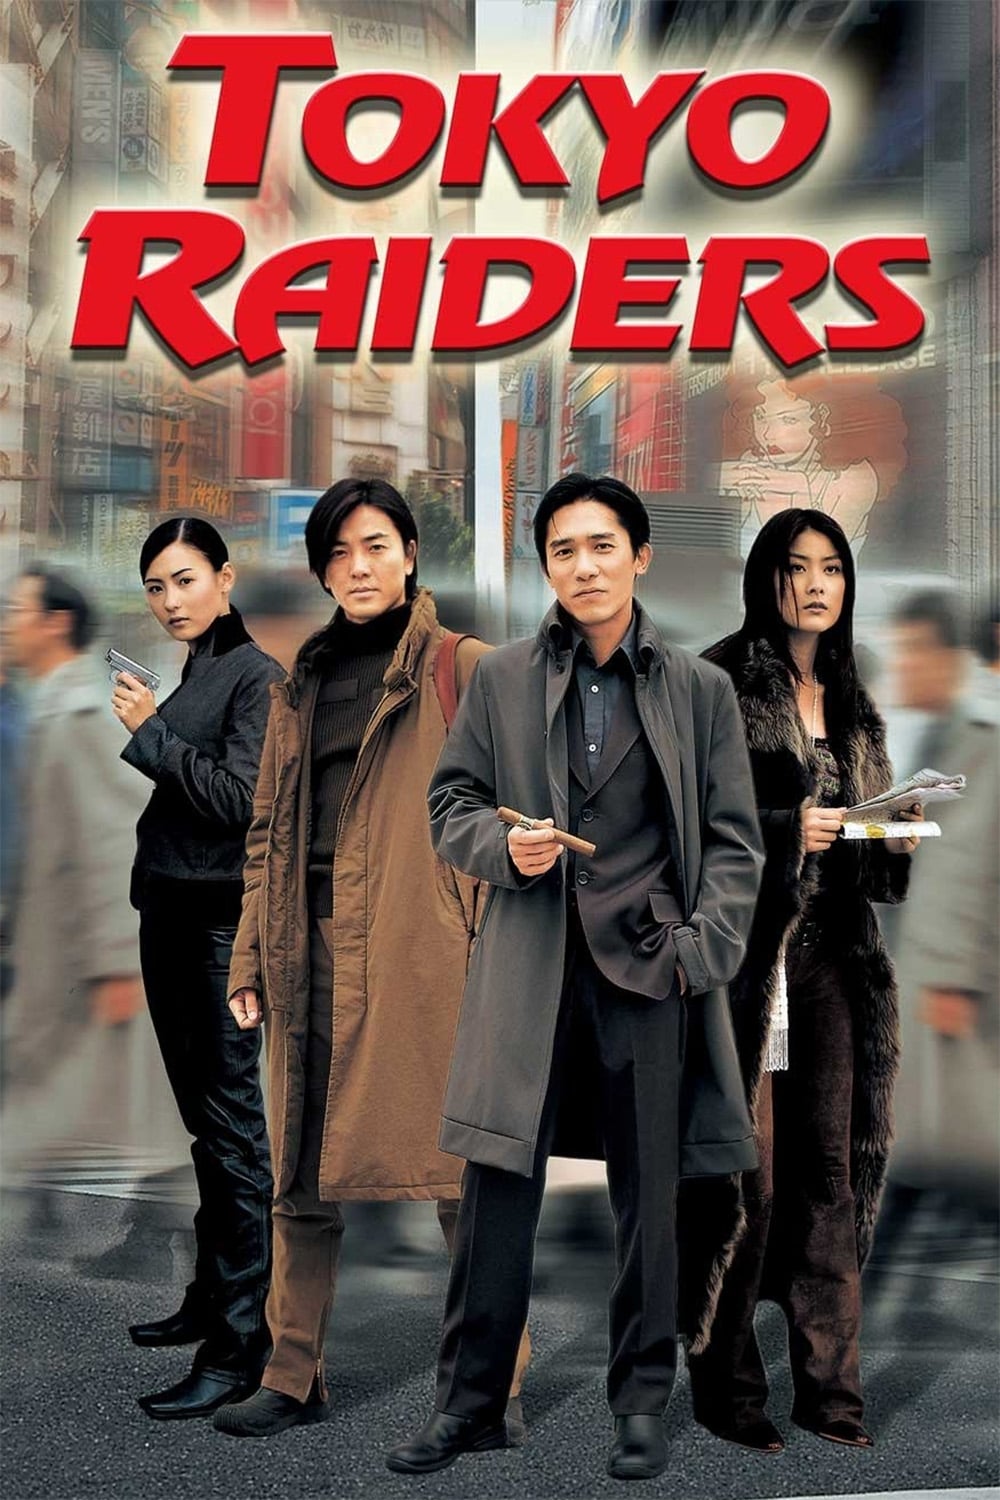 Tokyo Raiders streaming